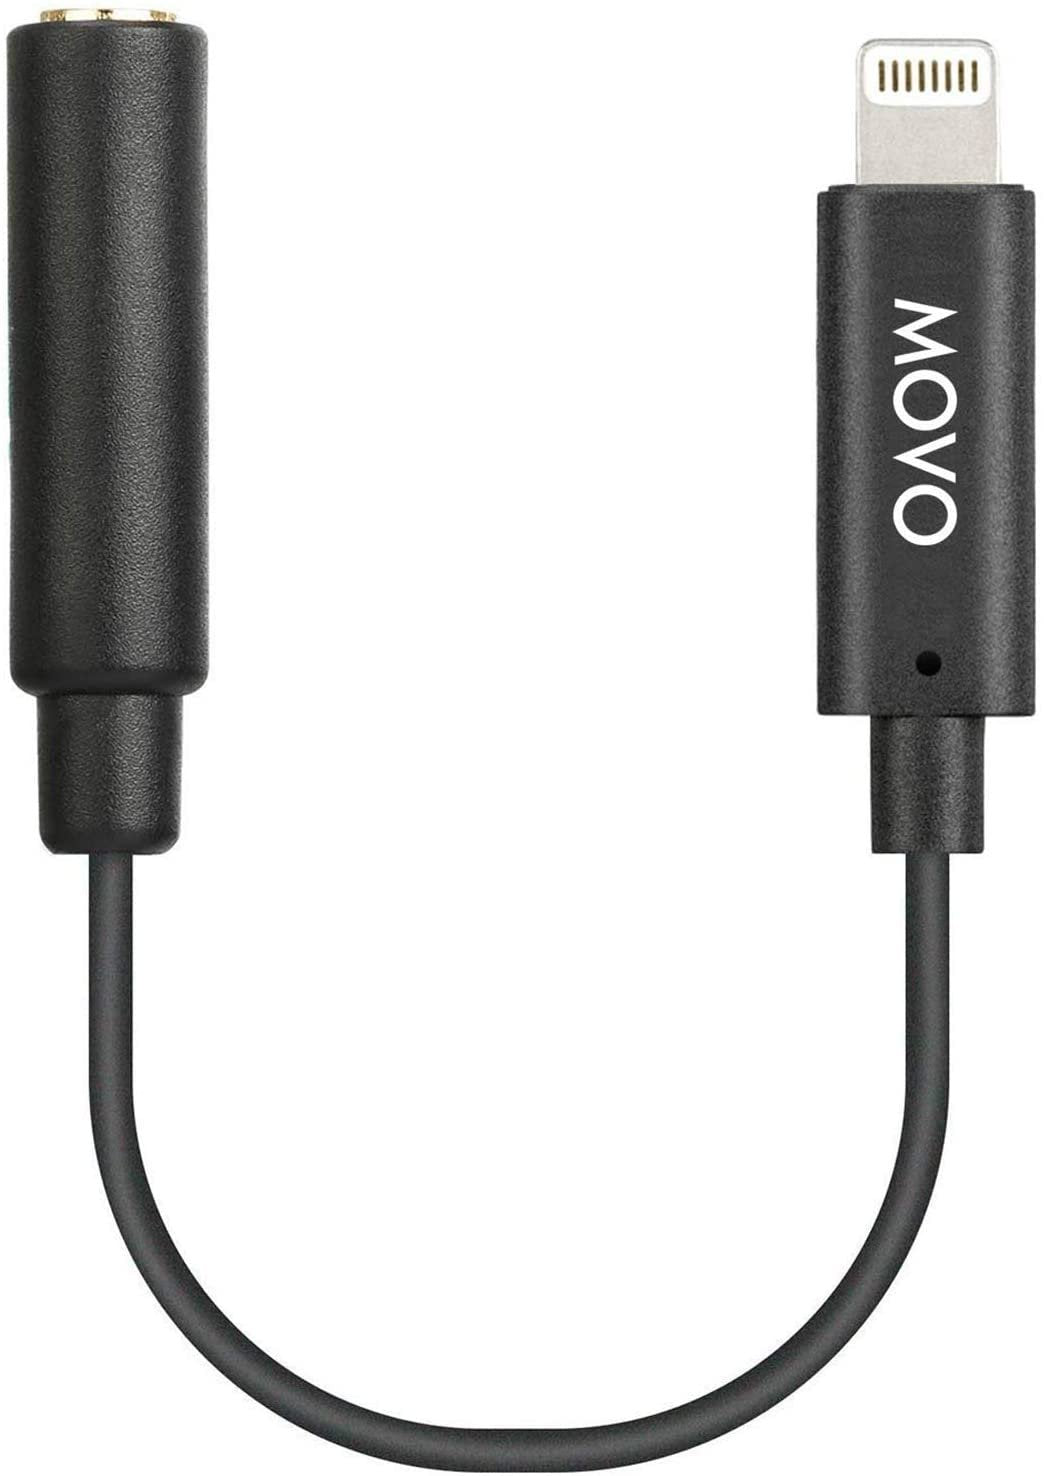 Movo IMA-2 3.5mm TRS to Lightning iPhone Headphone Adapter - Apple Headphone Adapter for iPhone - iPhone Aux Adapter for Mics and Headphones - 3.5 mm TRS Audio Cable to Lightning Adapter for Apple